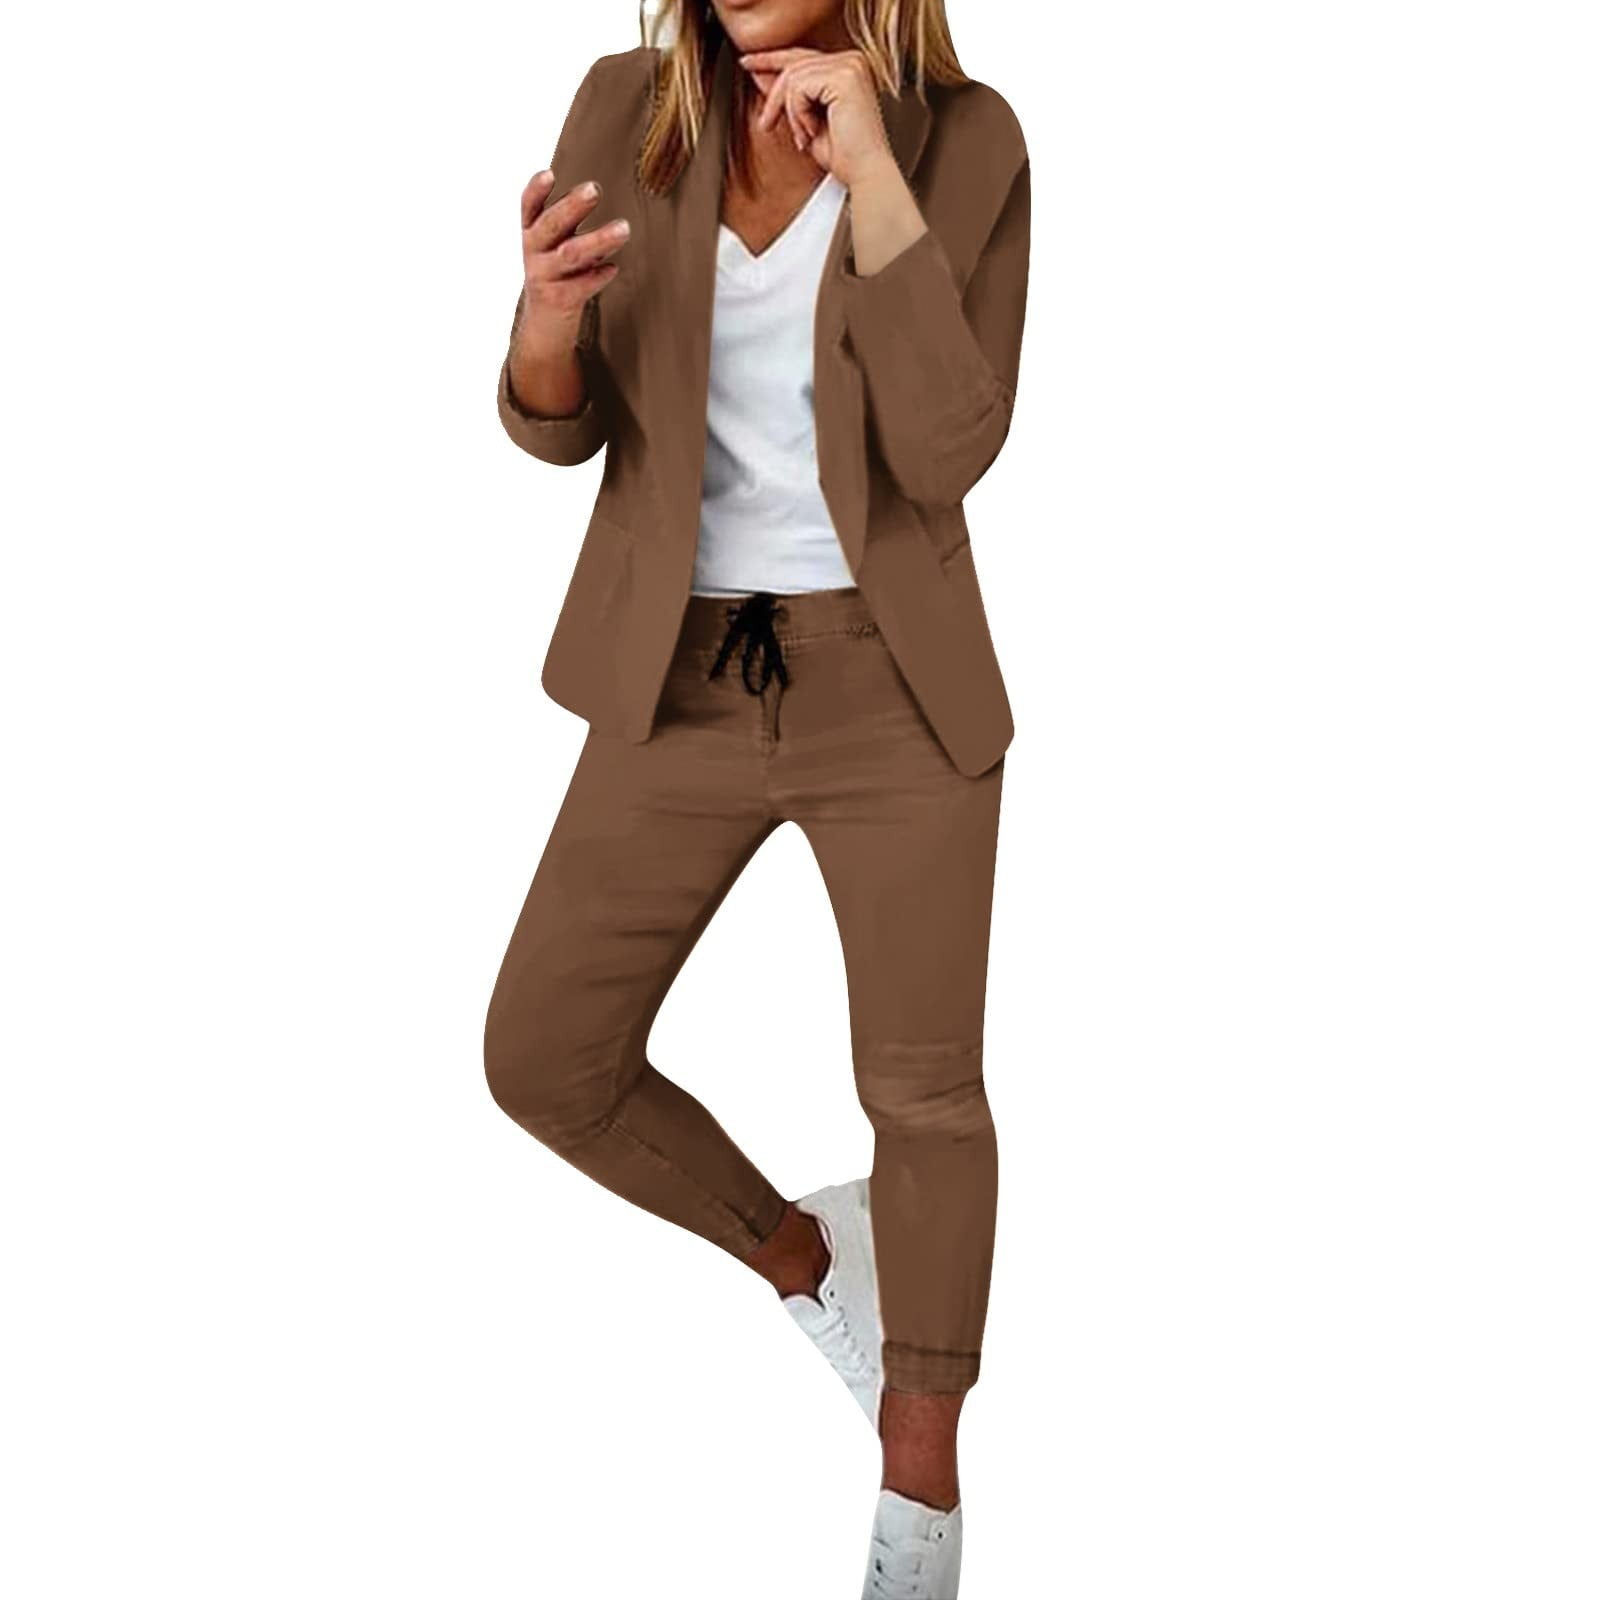 OVBMPZD Women's Long Sleeve Solid Suit Pants Casual Elegant Business Suit  Sets Coffee S